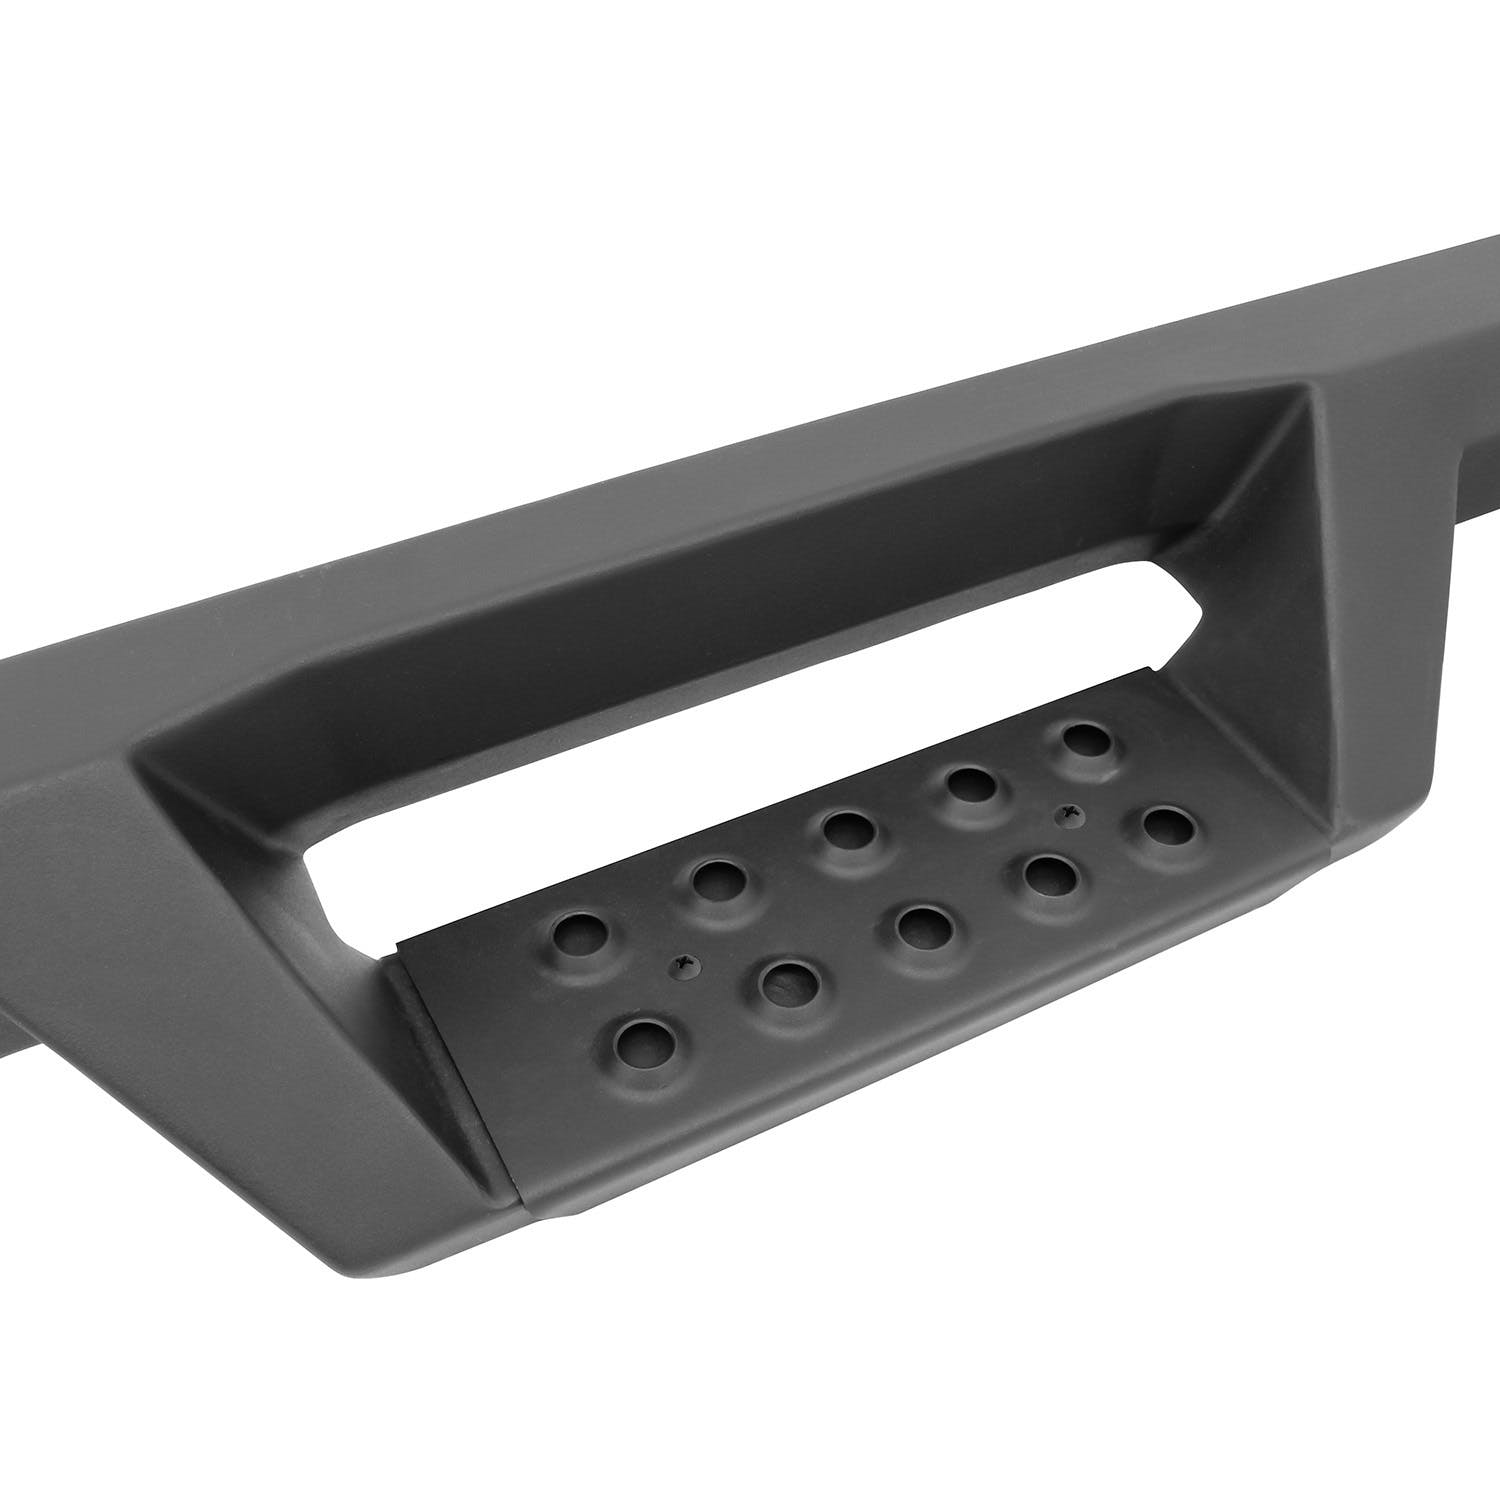 Westin Automotive 56-14015 HDX Drop Nerf Step Bars Textured Black